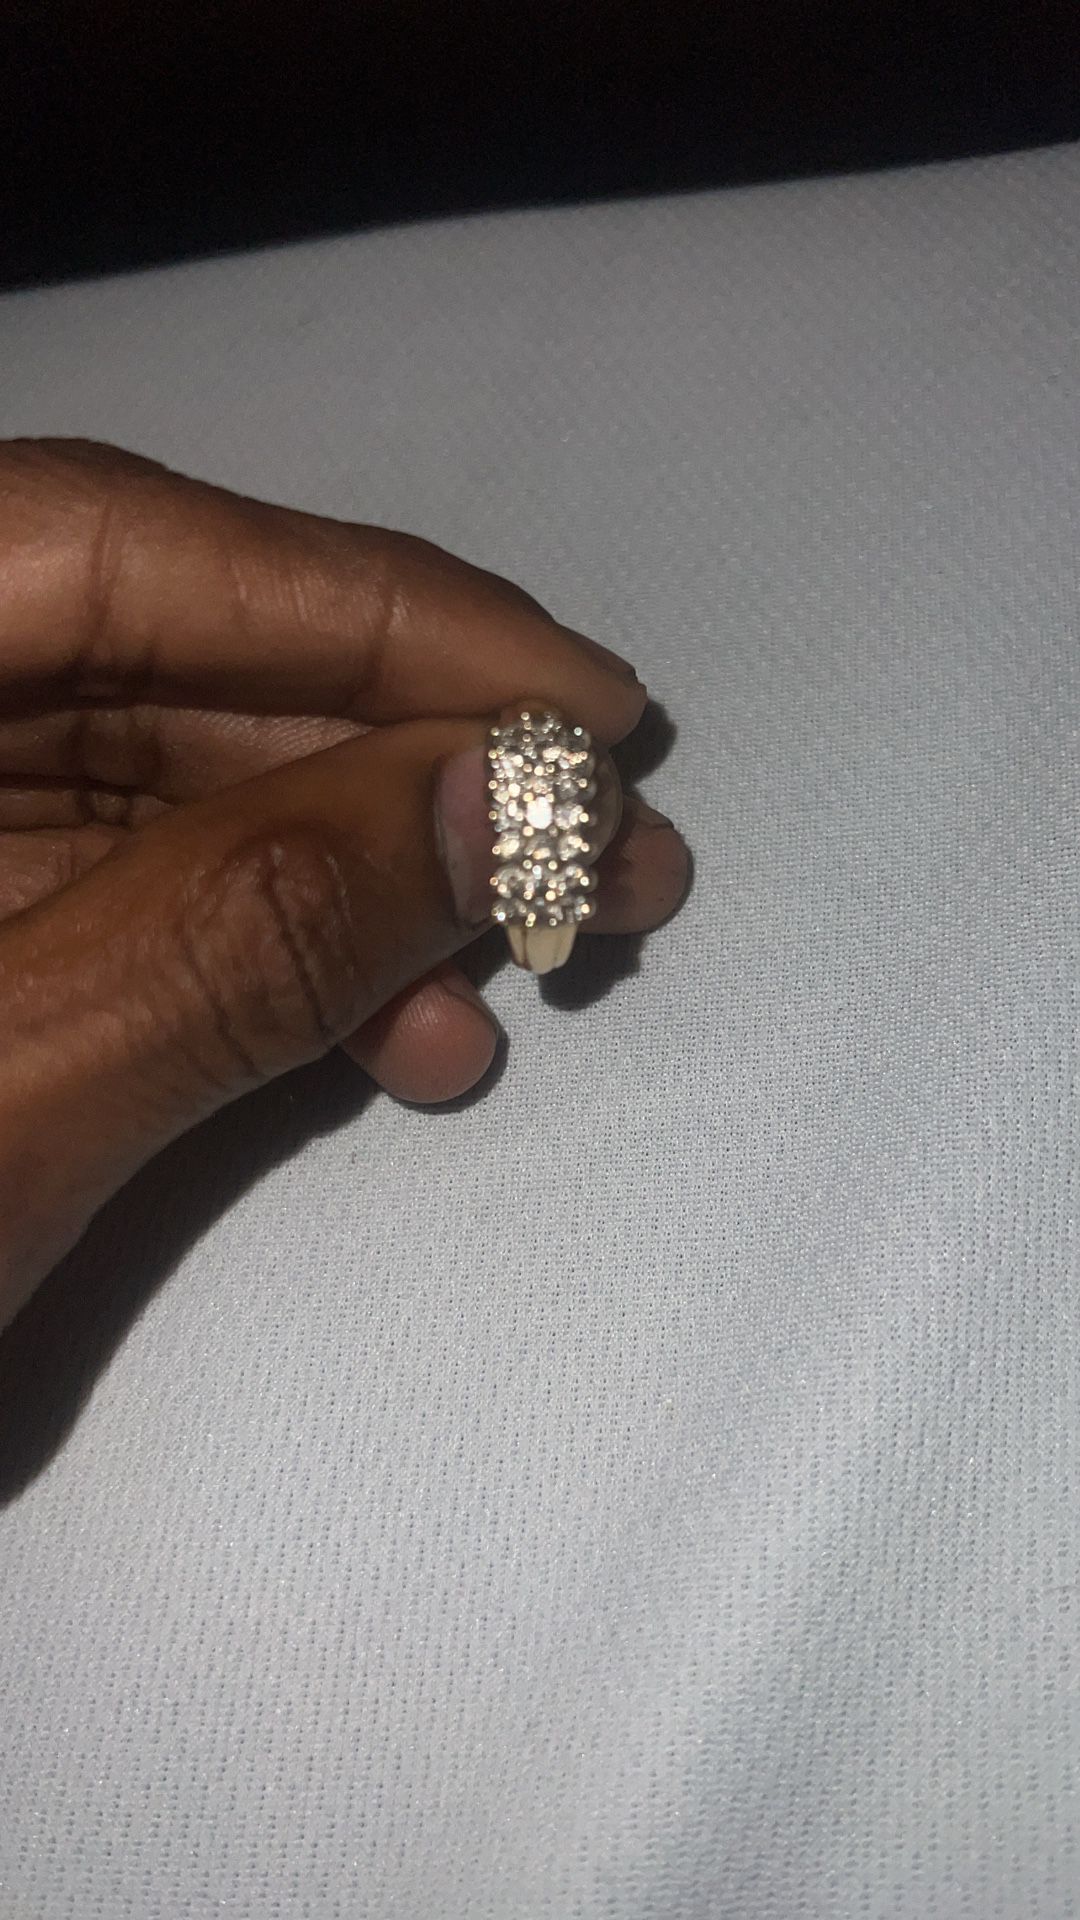 Diamond Ring 10k